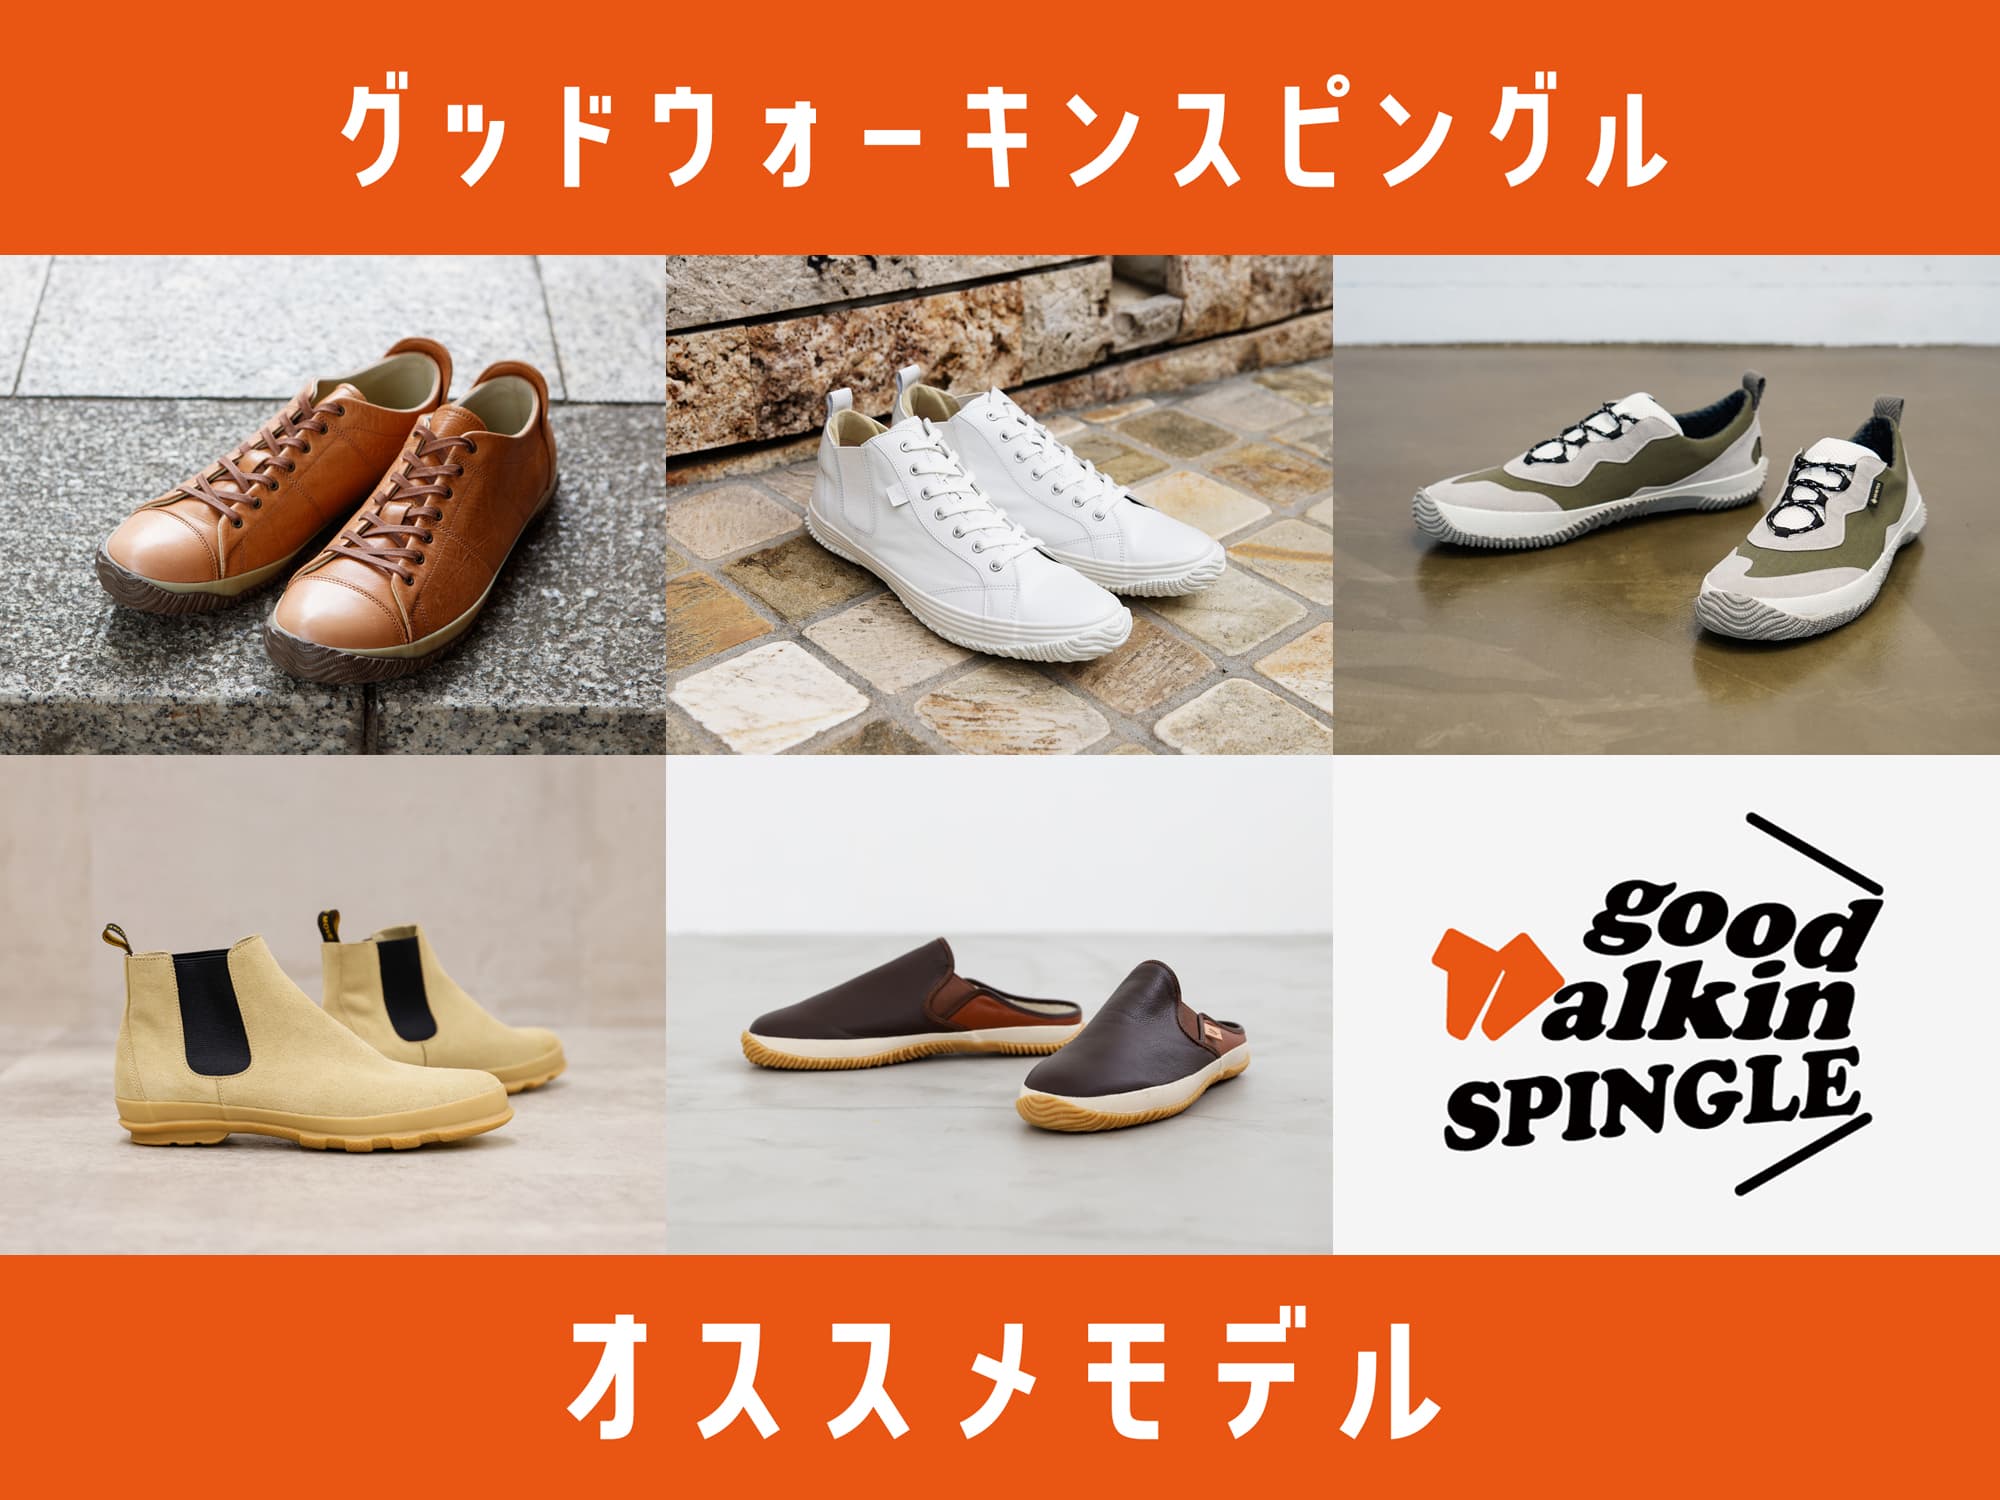 good walkin SPINGLE おすすめモデル紹介 - ブログ - 国産ハンドメイド